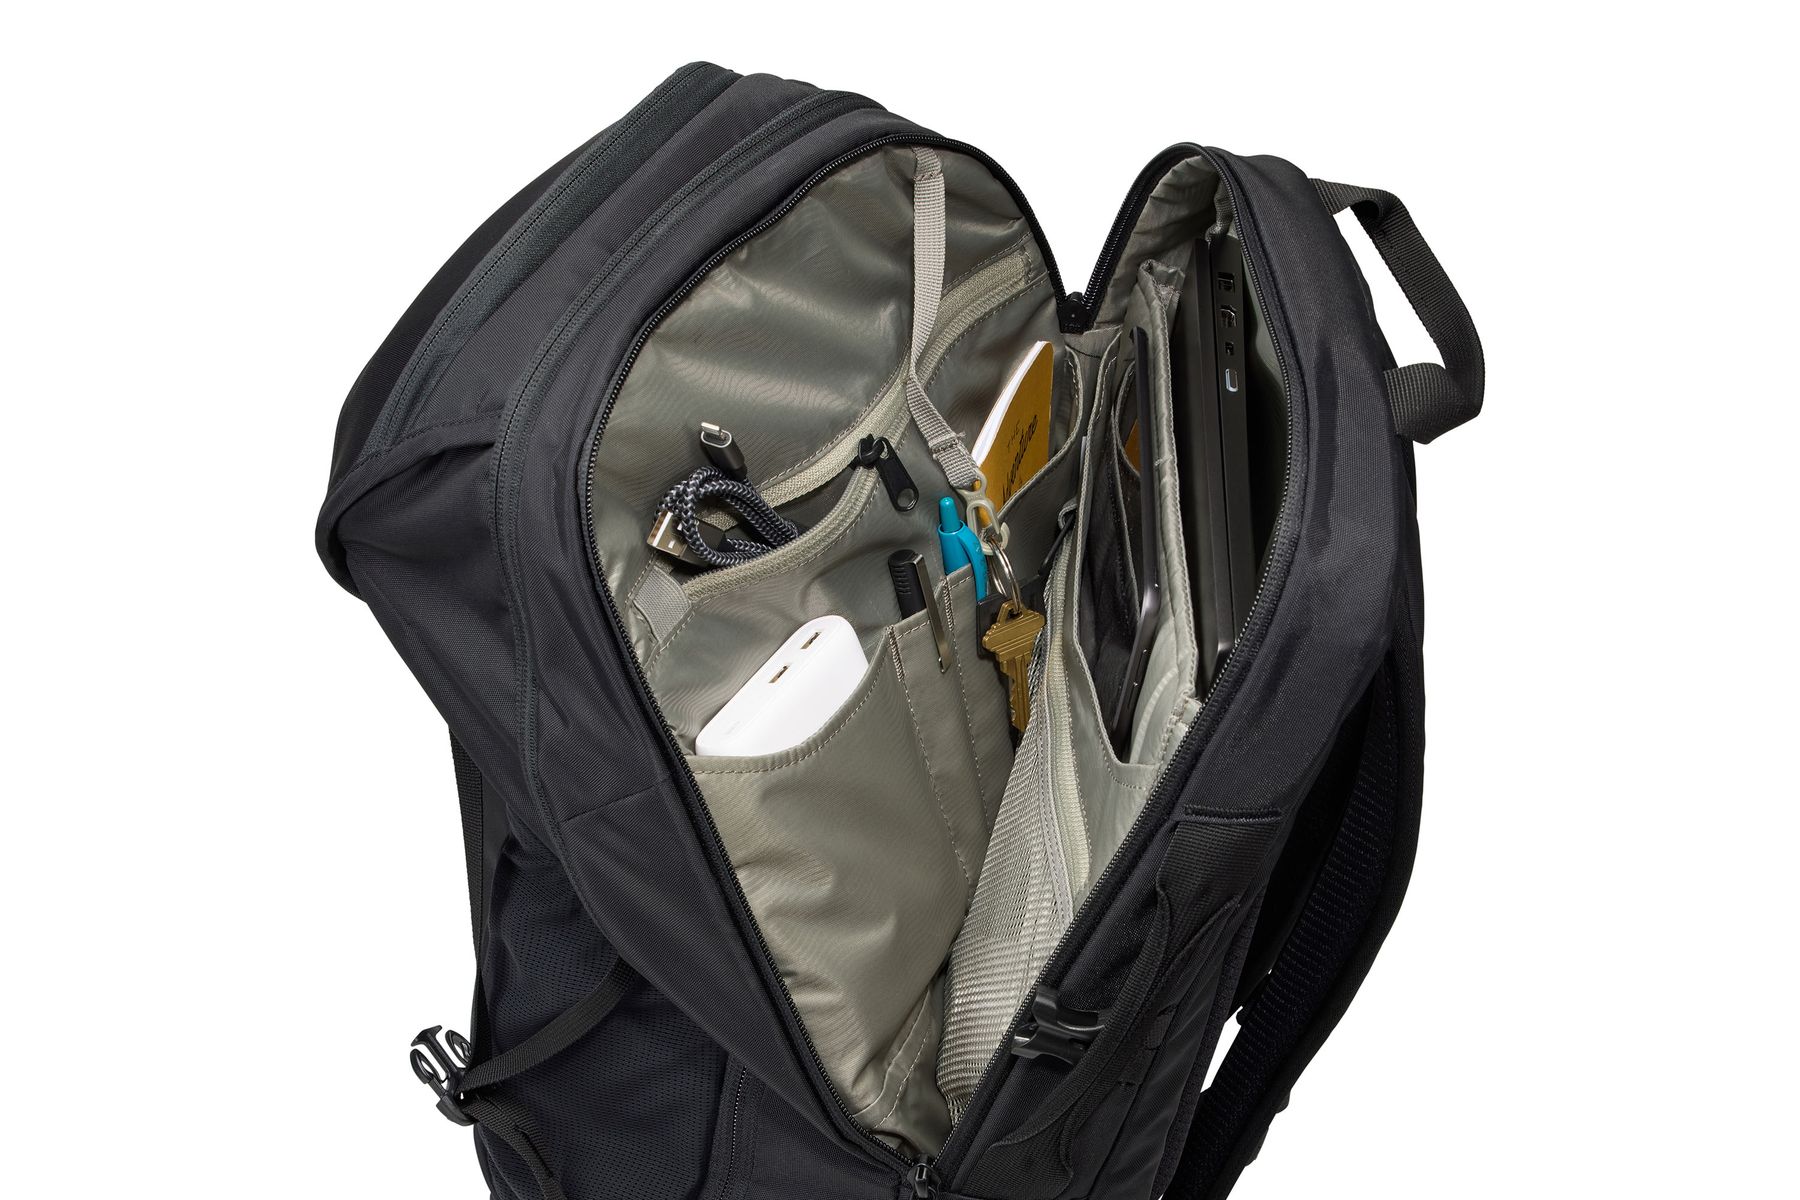 Thule EnRoute Backpack 30L